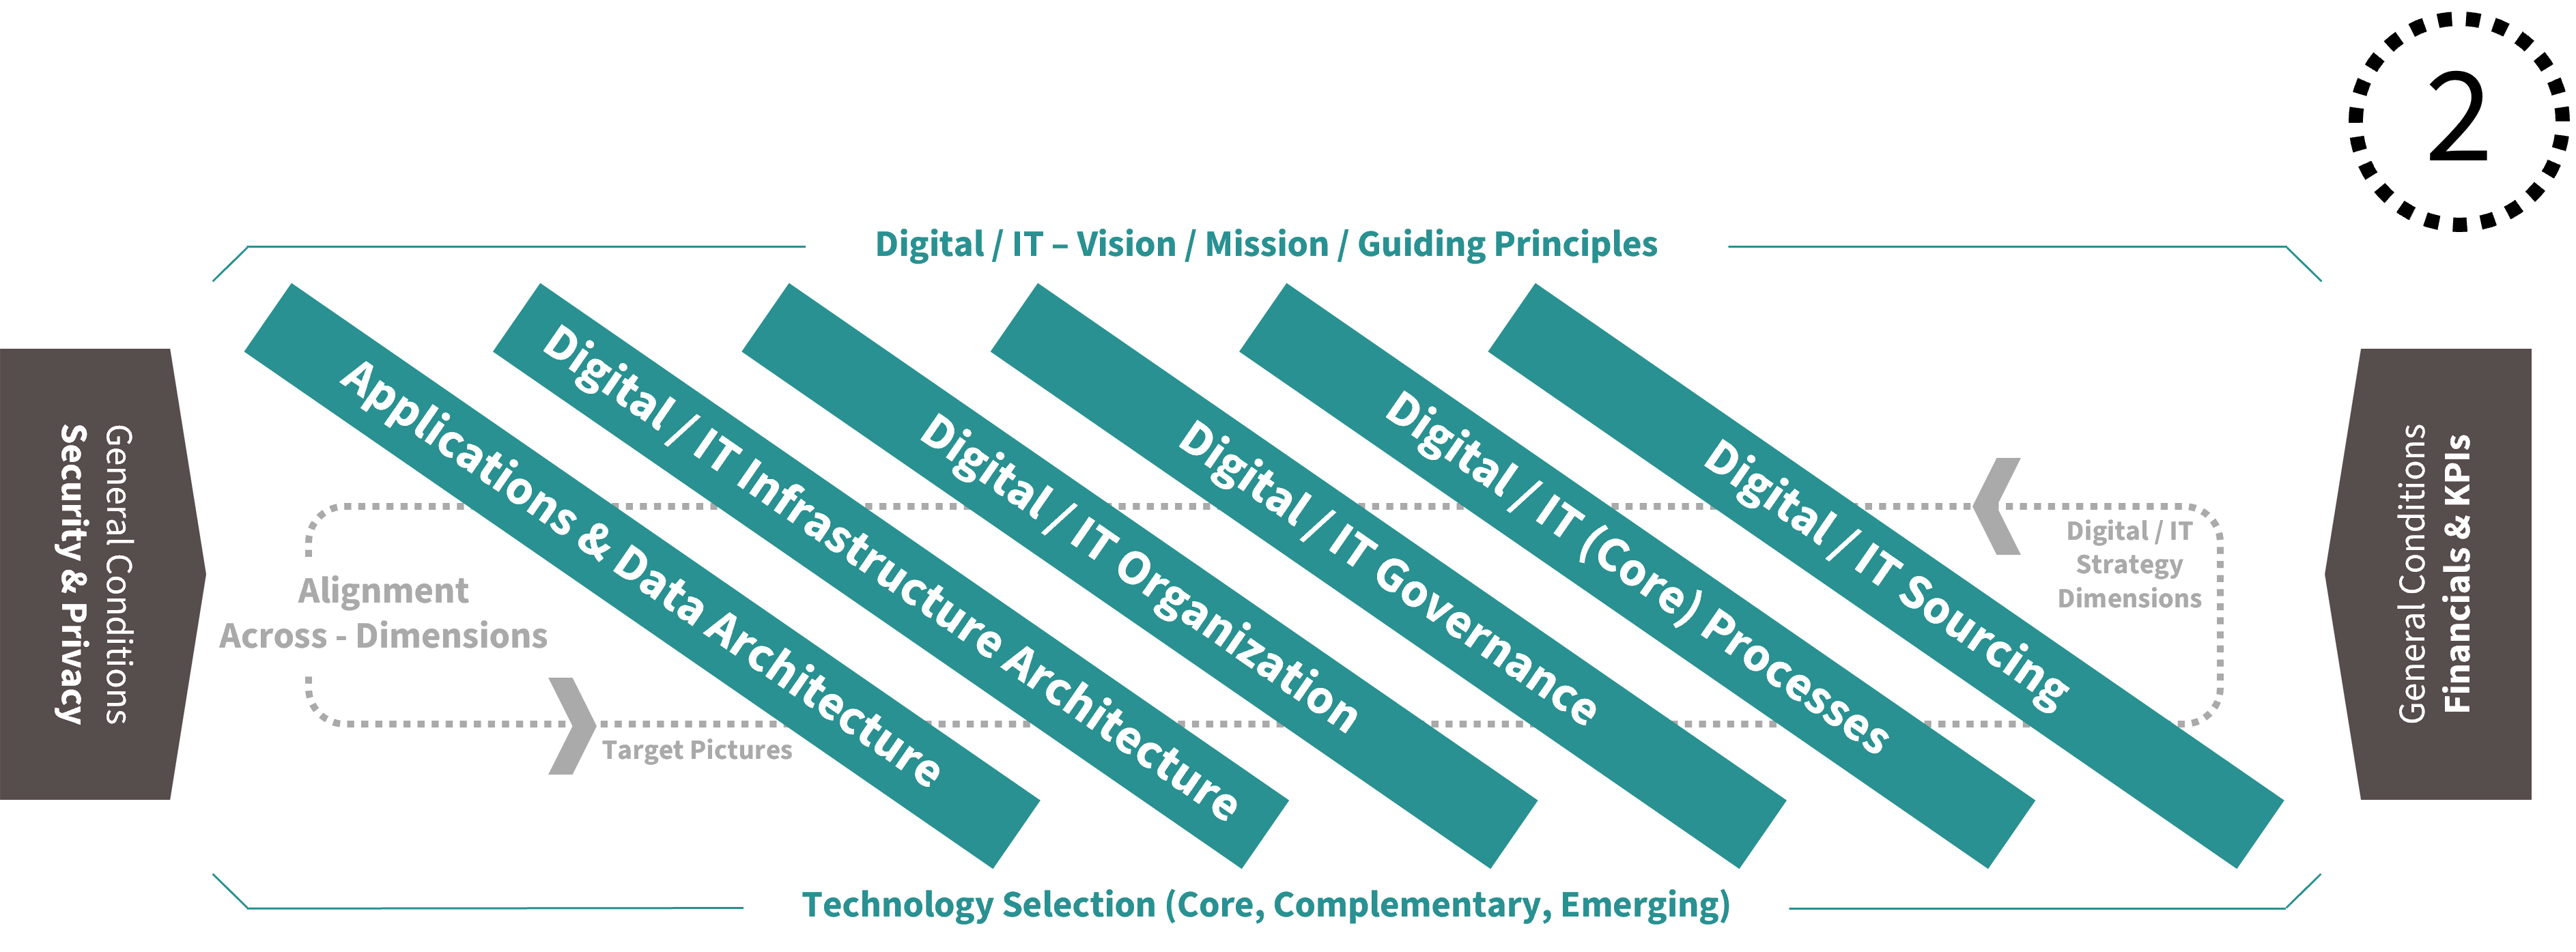 CKC Digital IT Strategy Meta Framework - Phase 2 - Elements